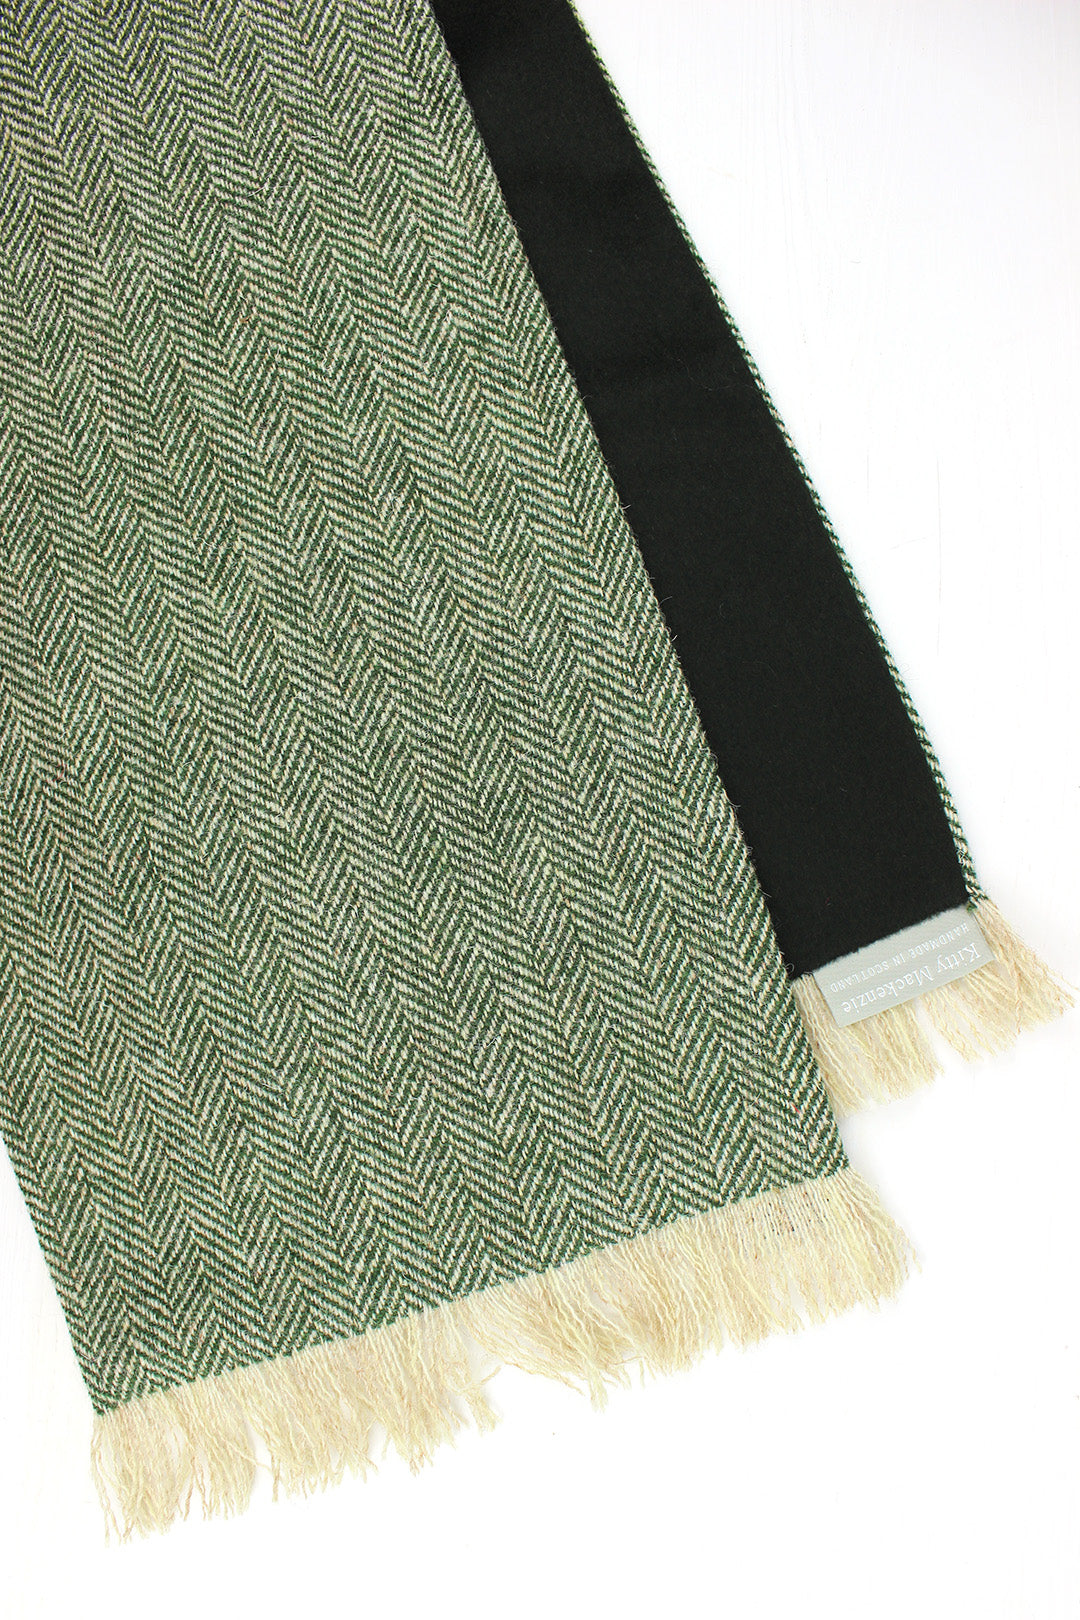 Harris tweed scarf in green herringbone, lined with a dark green cashmere. Made in Scotland